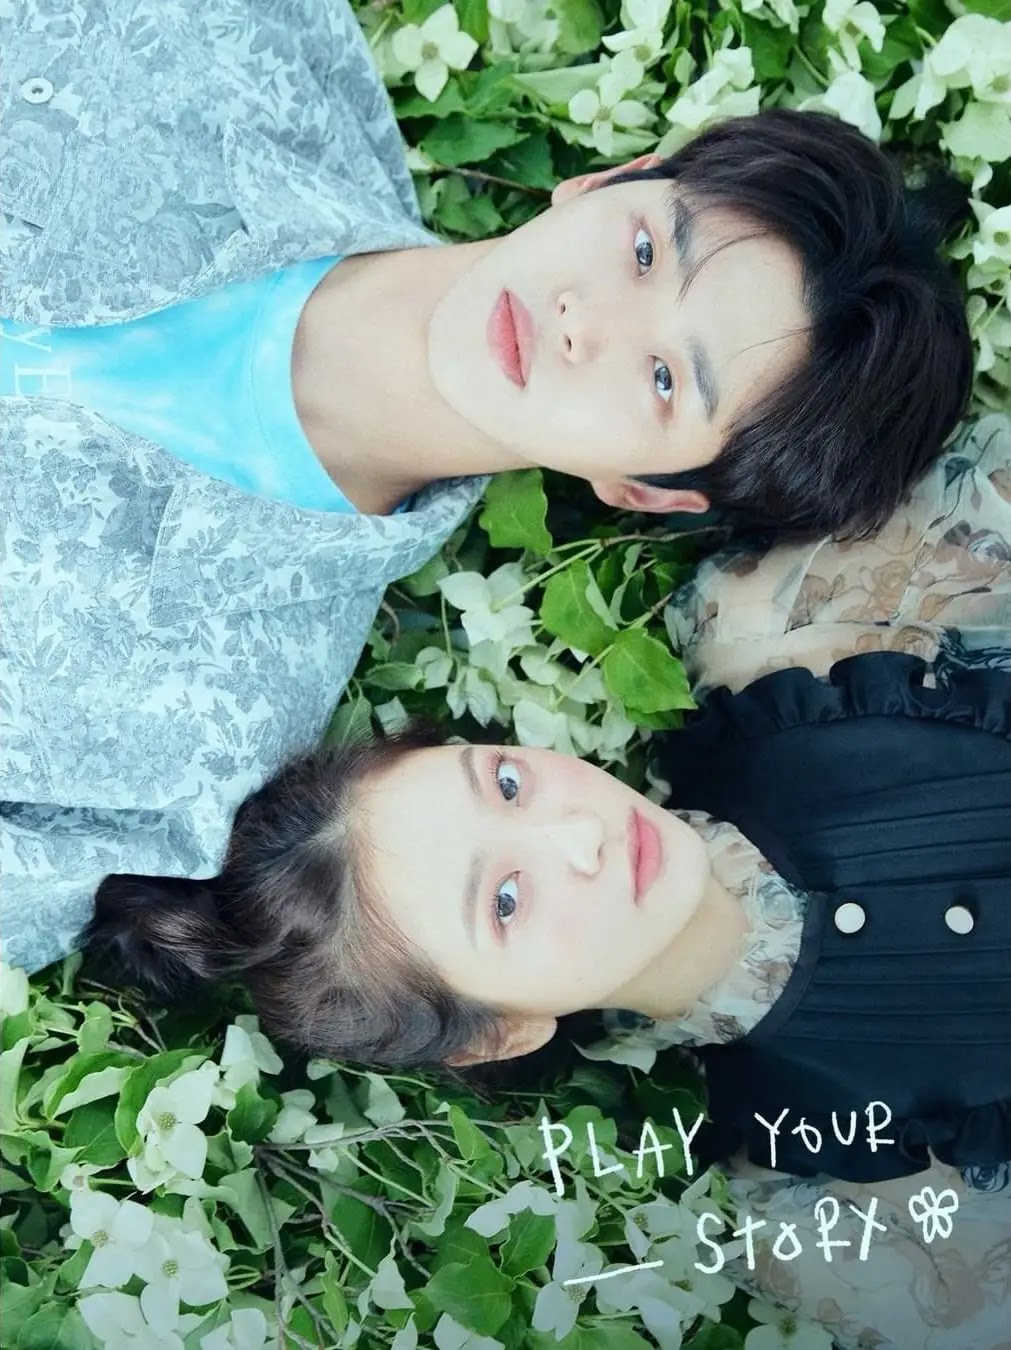 Web Drama 'Blue Birthday' Releases Yeri and Hongseok Poster Ahead of Broadcast